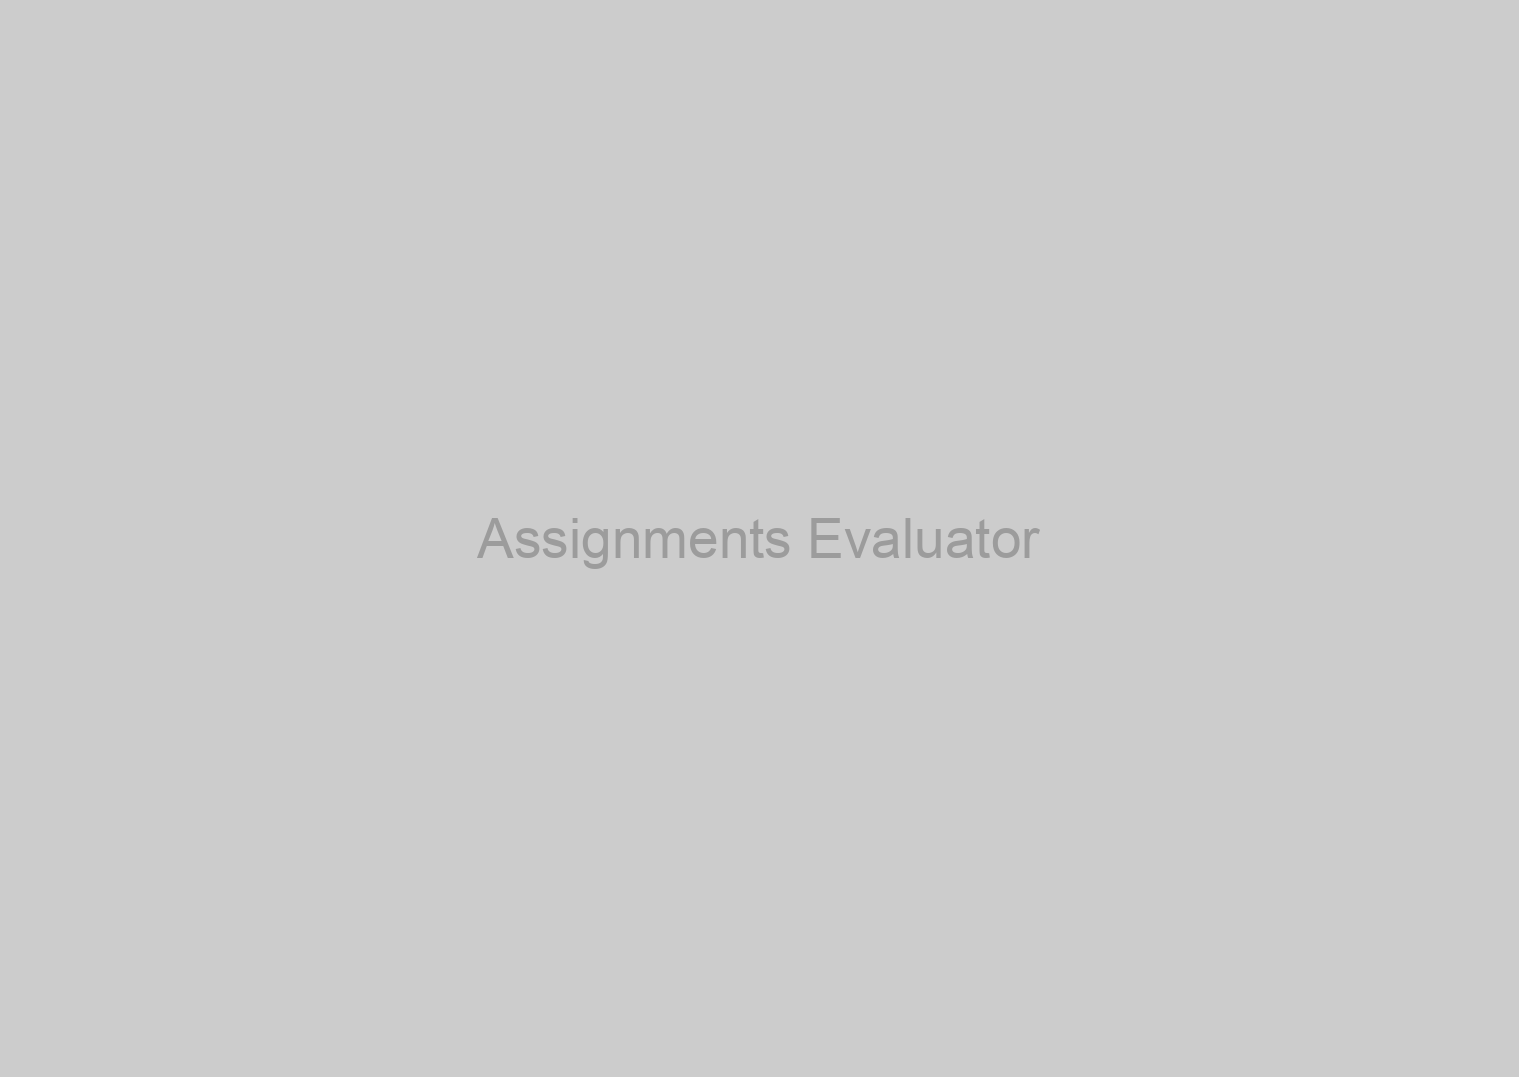 Assignments Evaluator